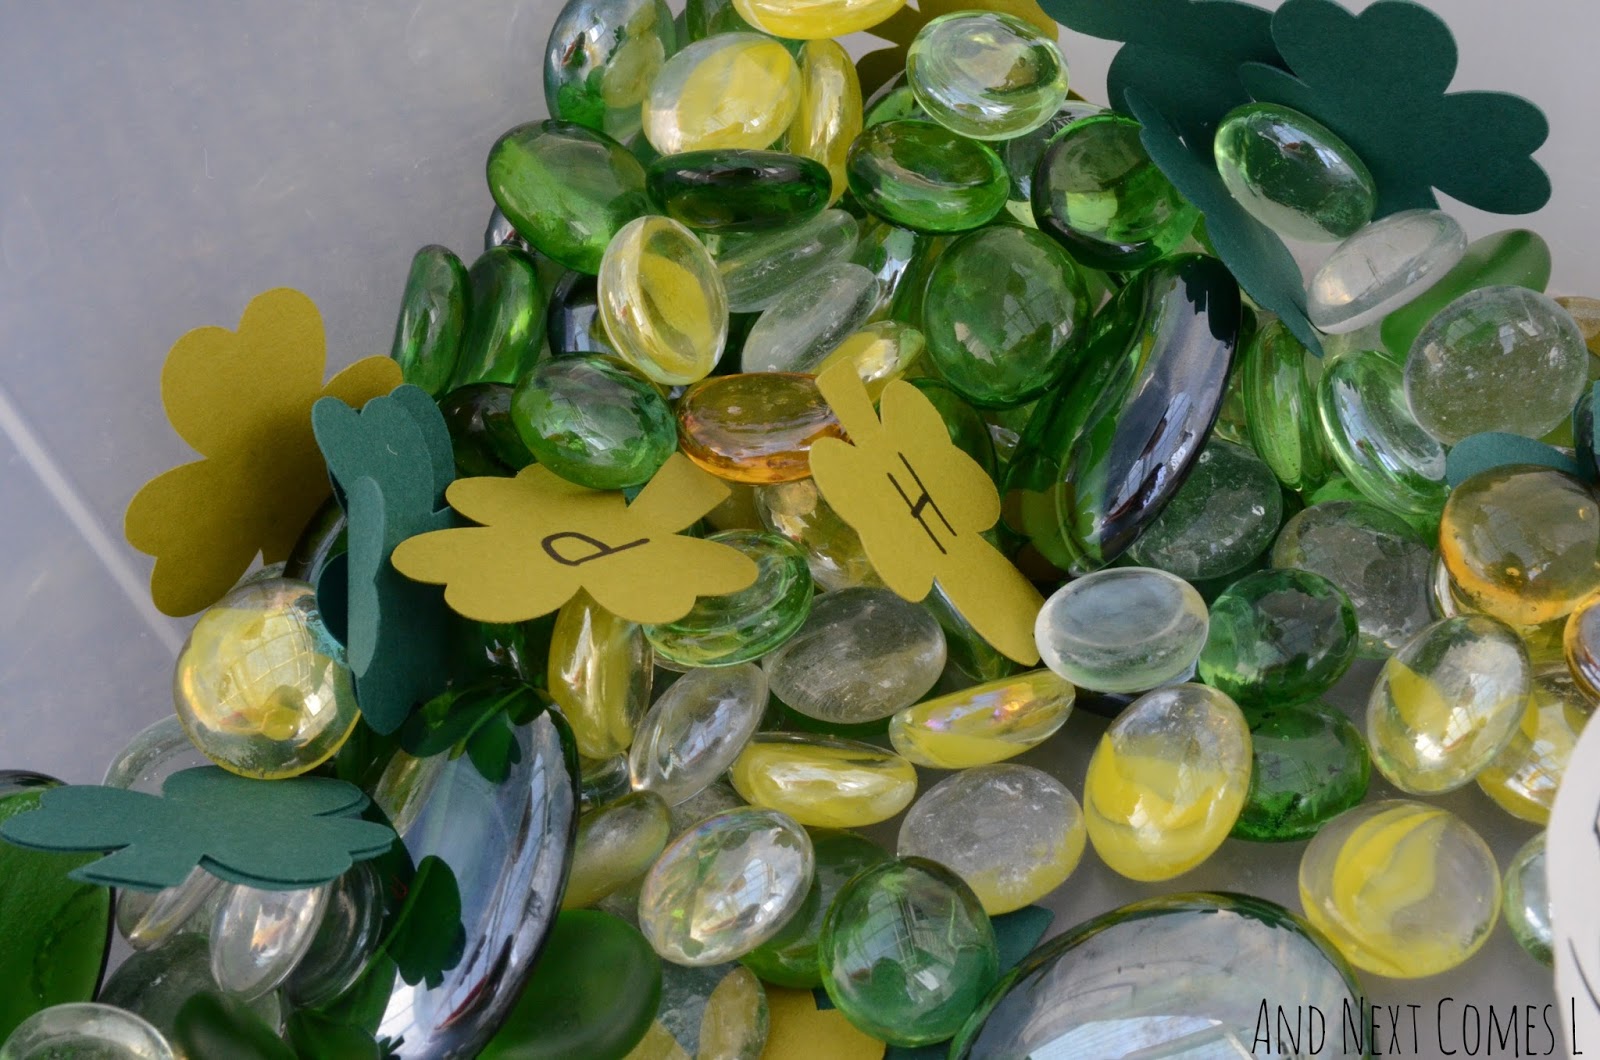 St. Patrick's Day sensory bin for kids